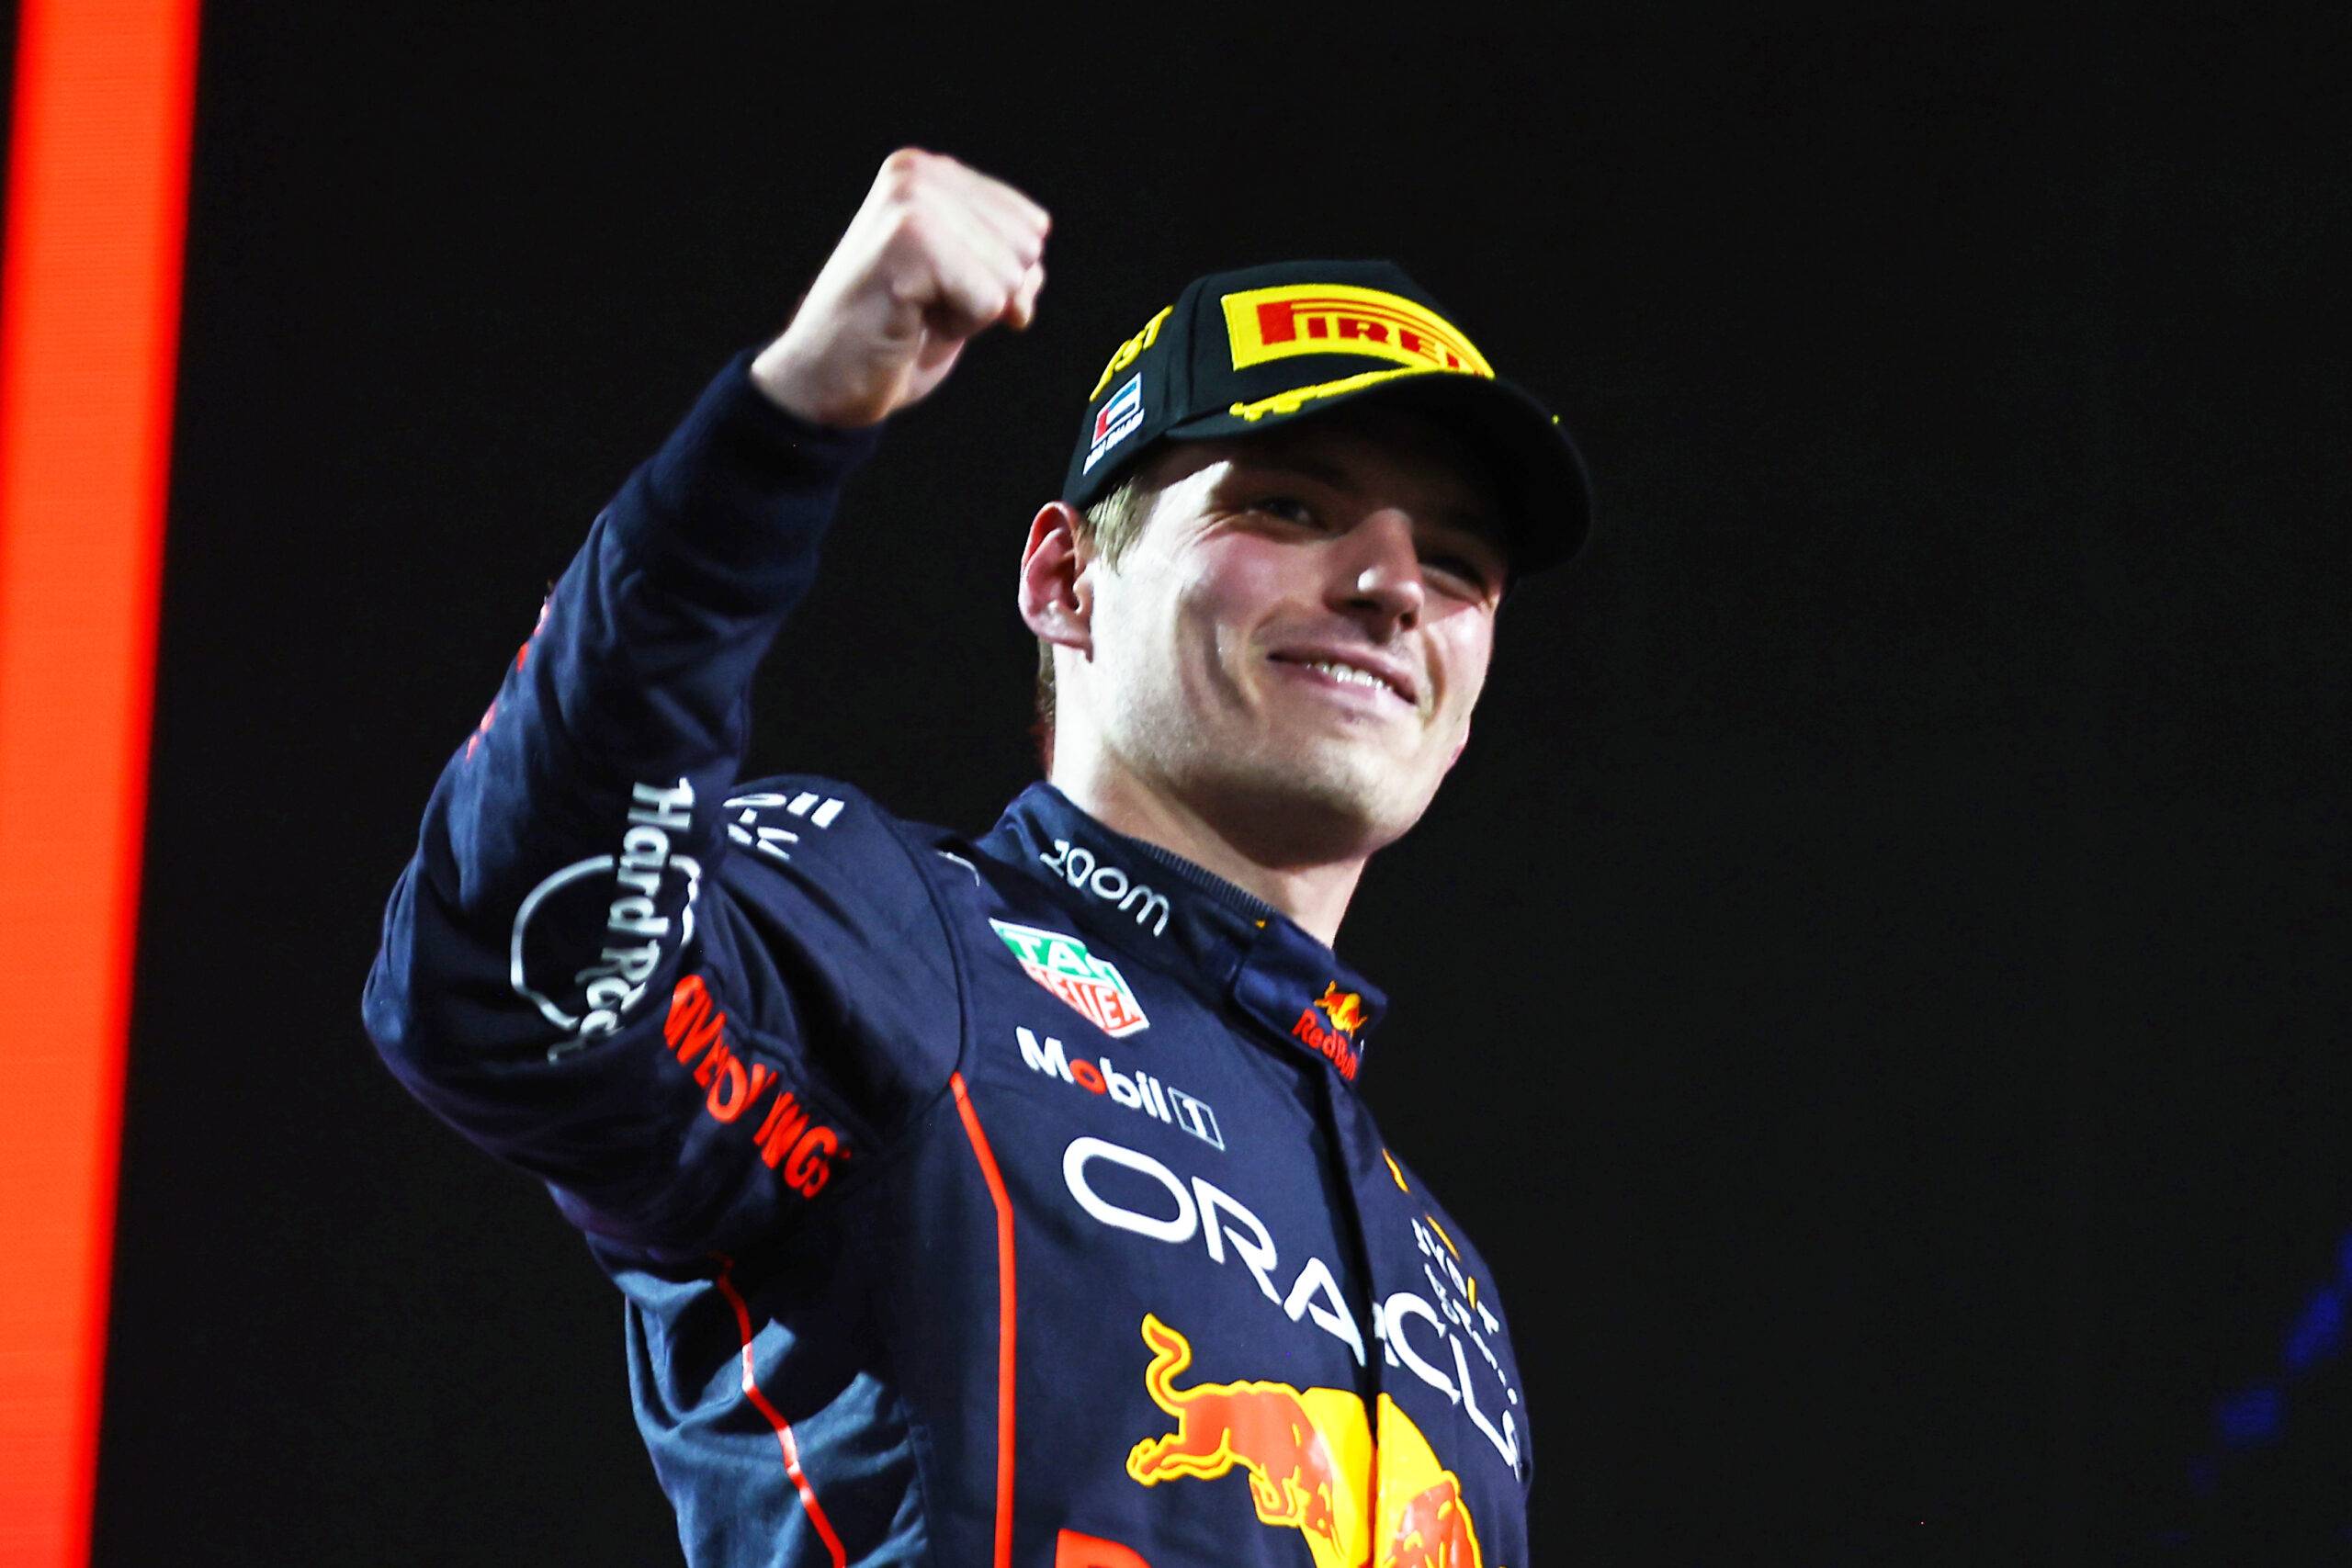 Max Verstappen wins the Abu Dhabi GP